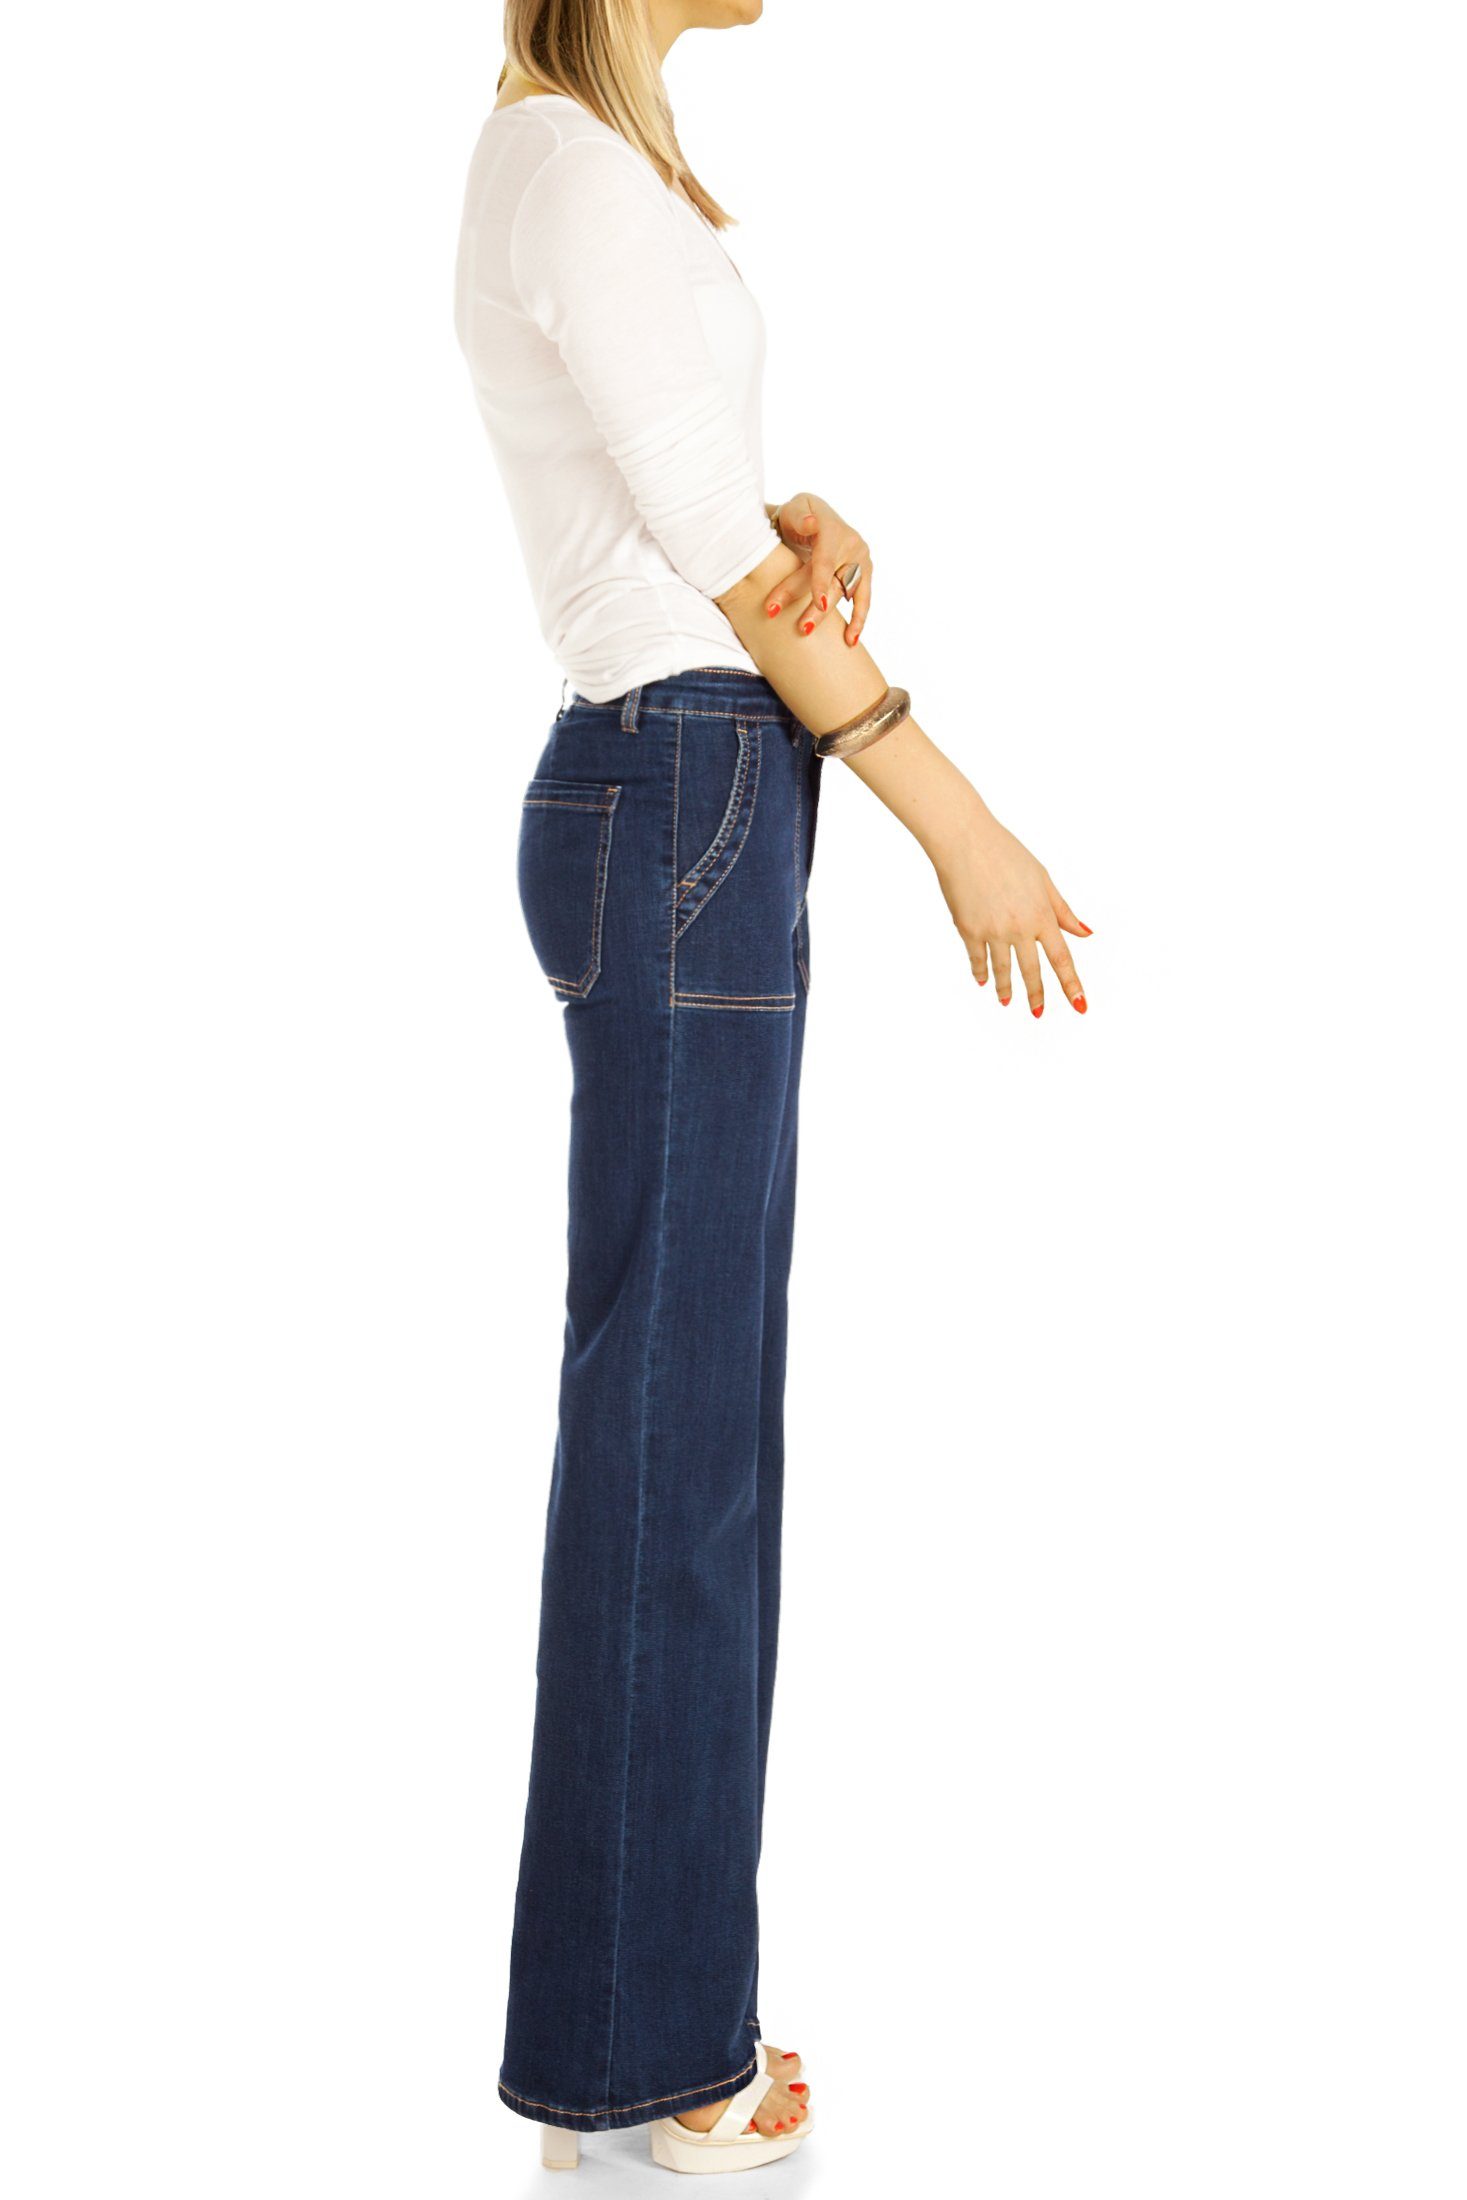 waist mit Hosen be Stretch-Anteil, Passform 5-Pocket-Style straight Jeans, j31k - Bootcut-Jeans Damen Bootcut - hellblau styled medium